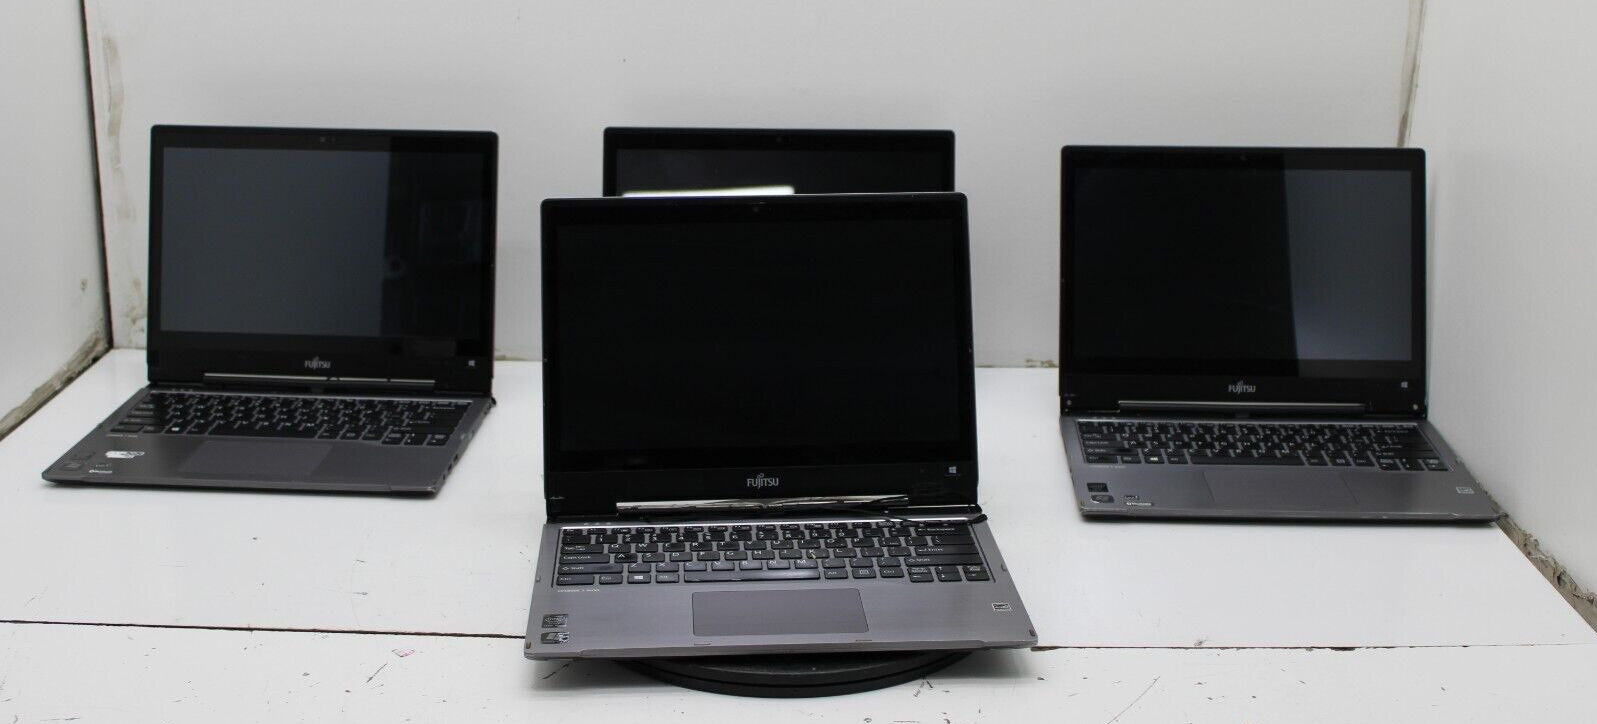 Lot of 4 fujitsu Lifebook T904 Laptops Intel Core i5-4300u No Ram - Parts Only